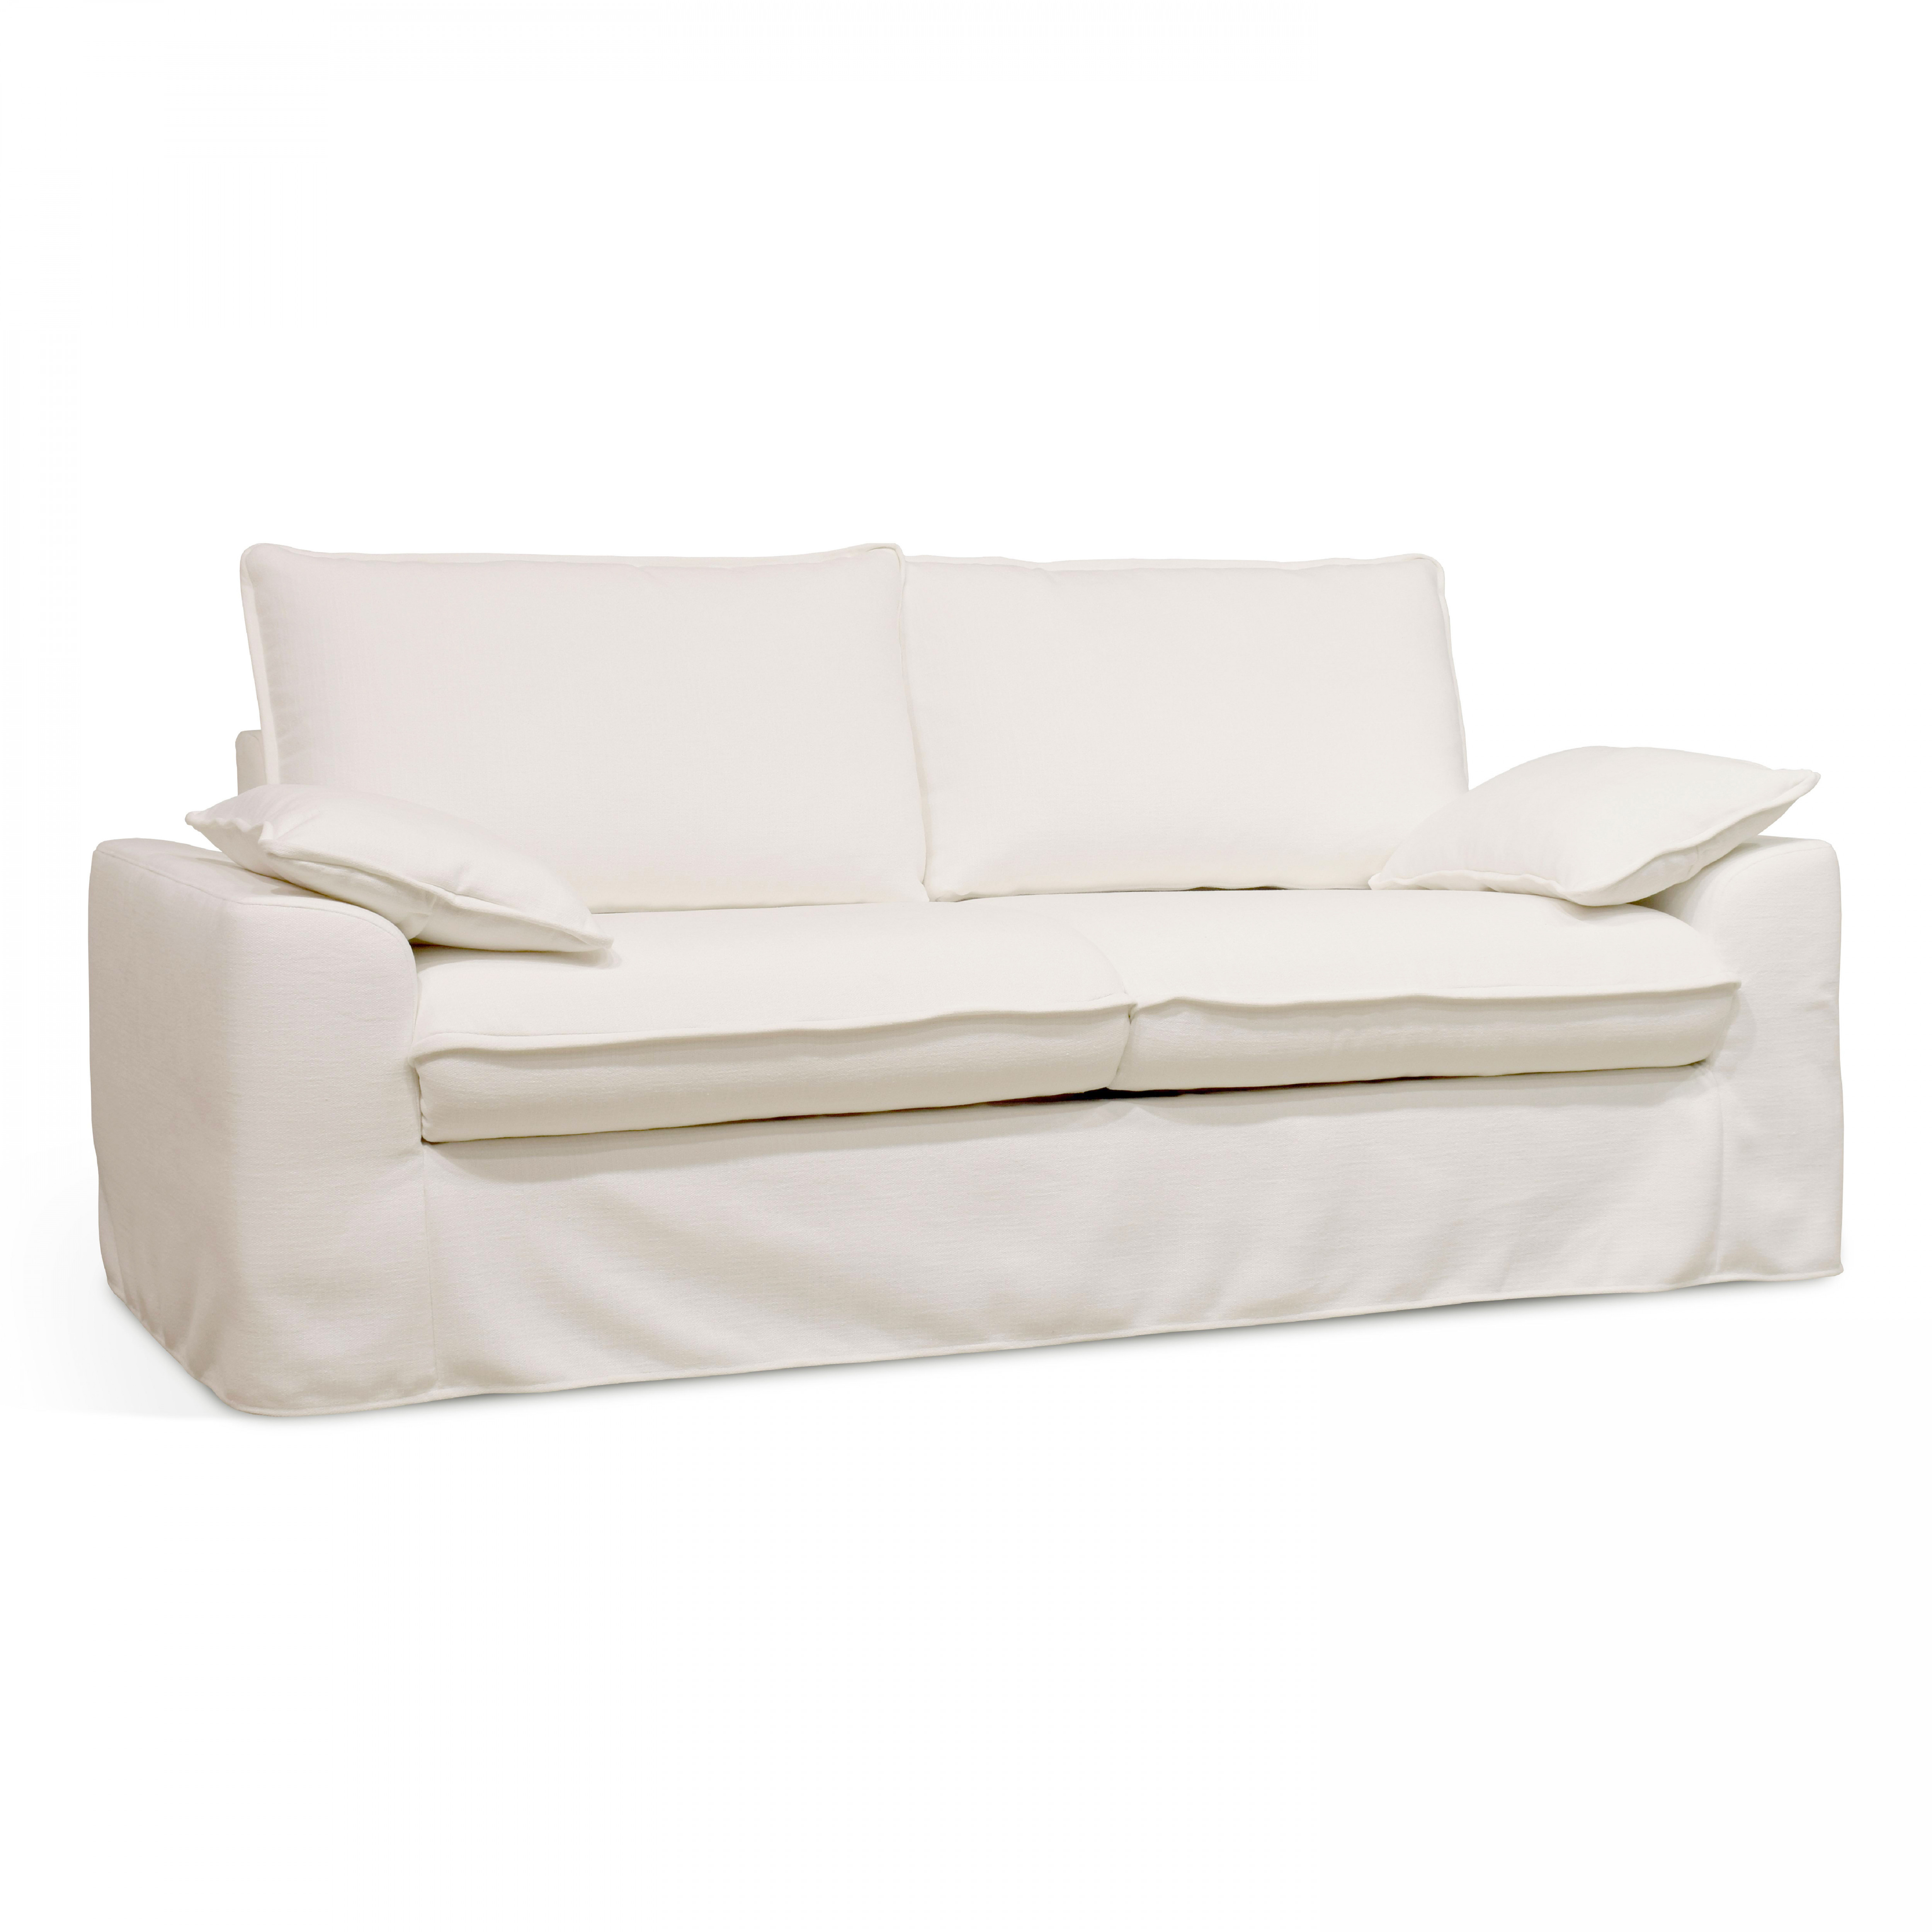 Canapé 3 places Blanc Tissu Luxe Confort